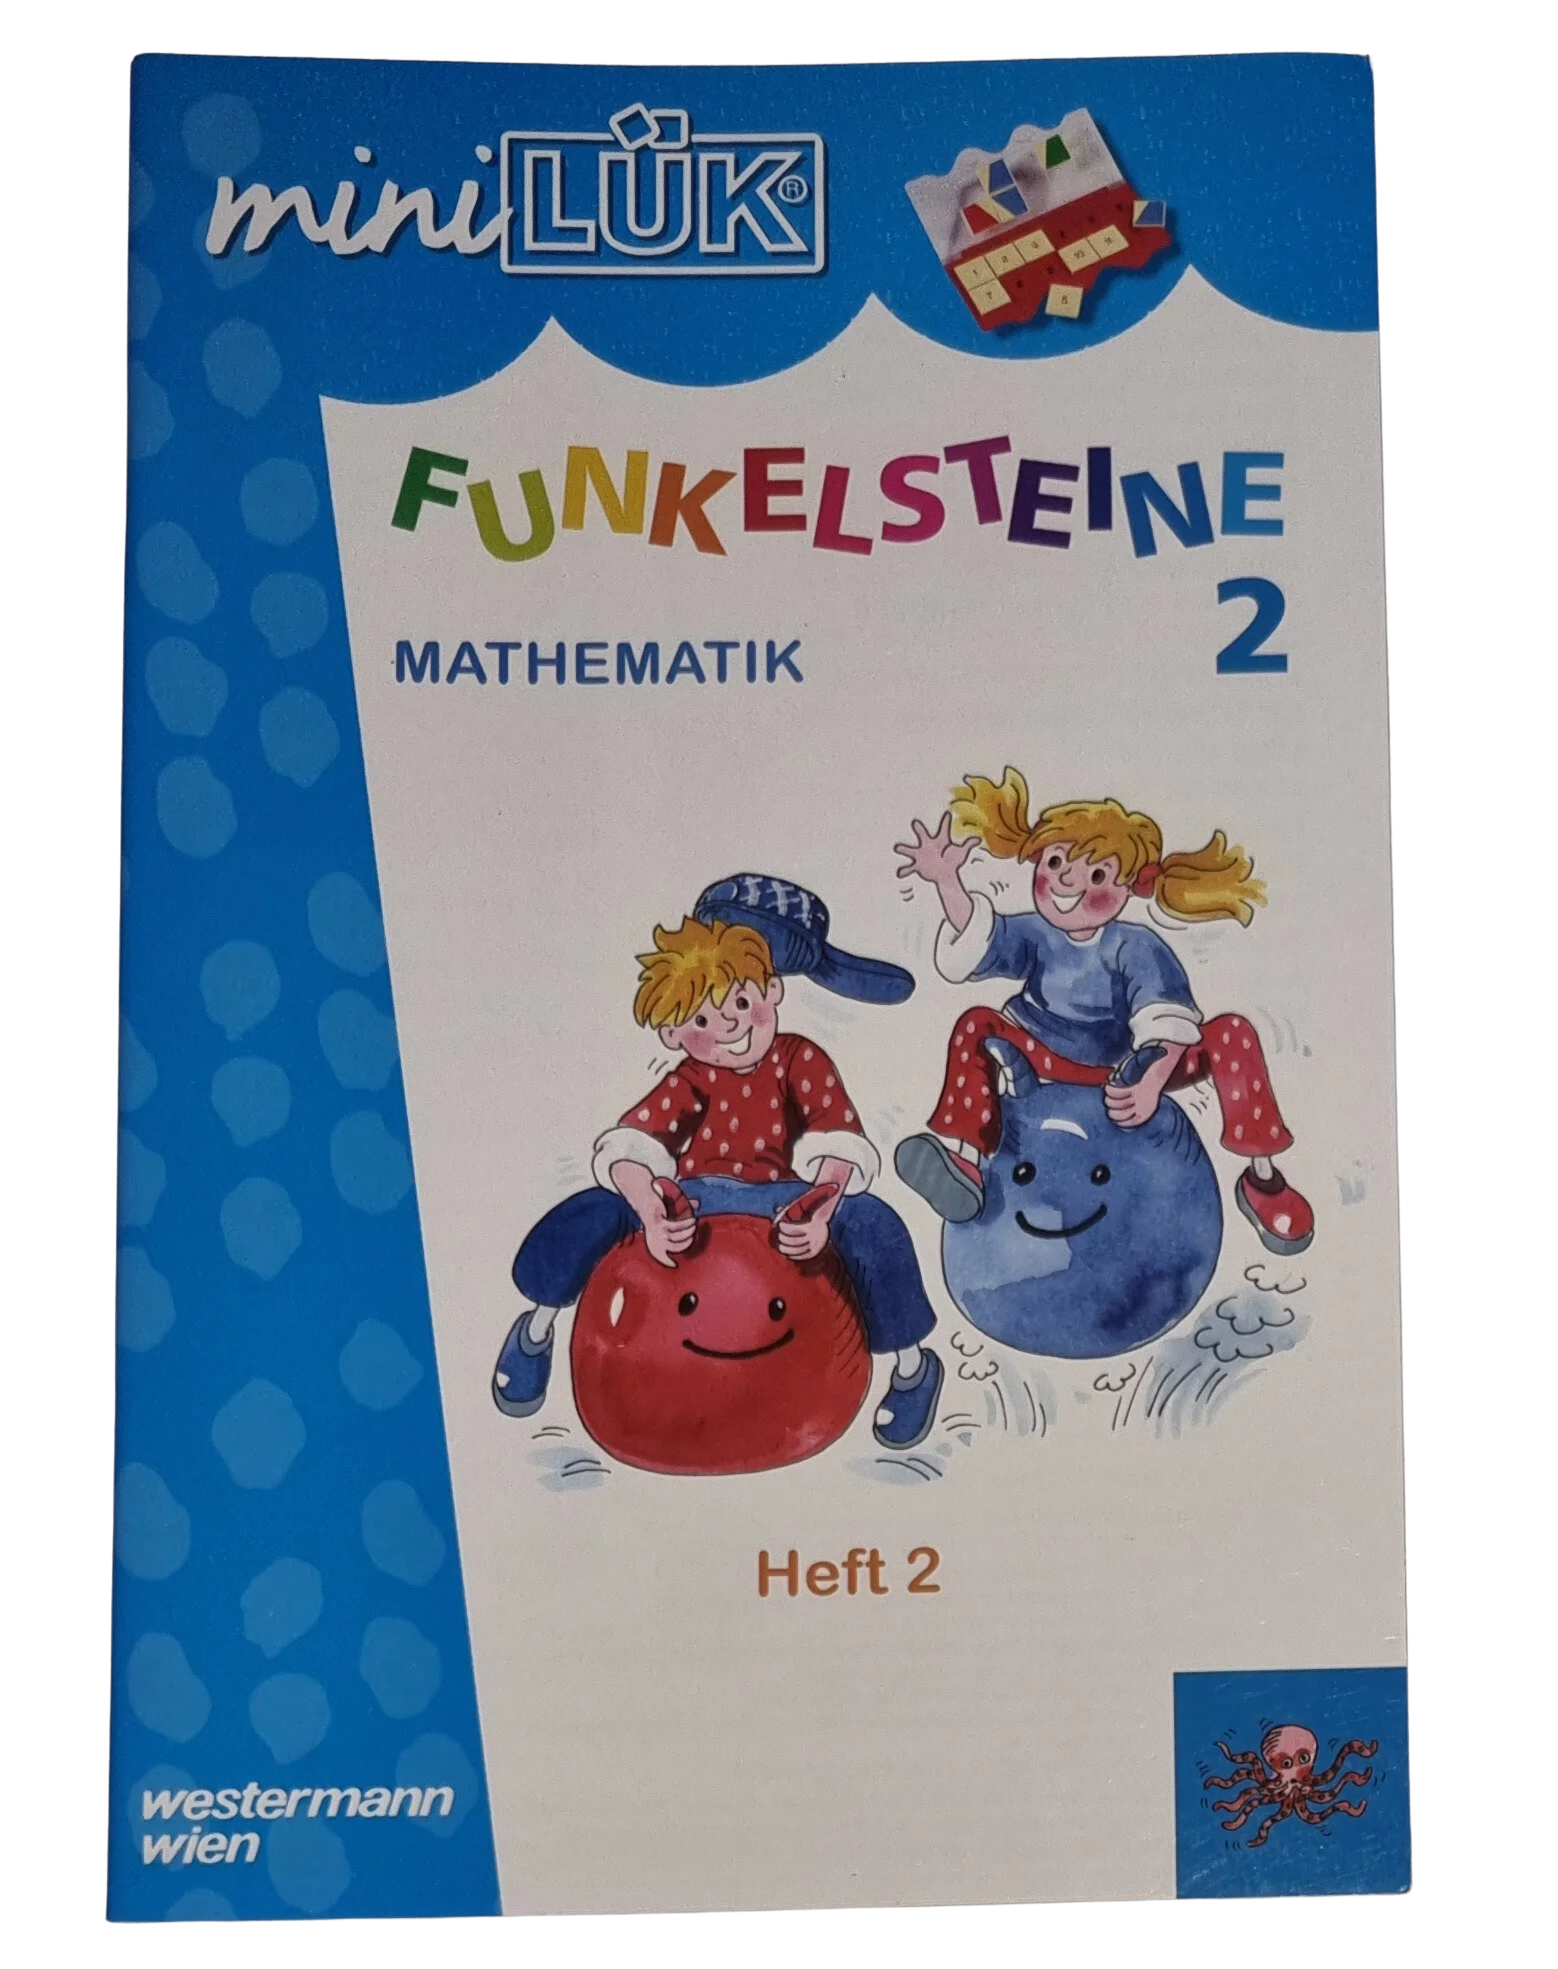 Mini Lük Funkelsteine 2 Mathematik Heft 2